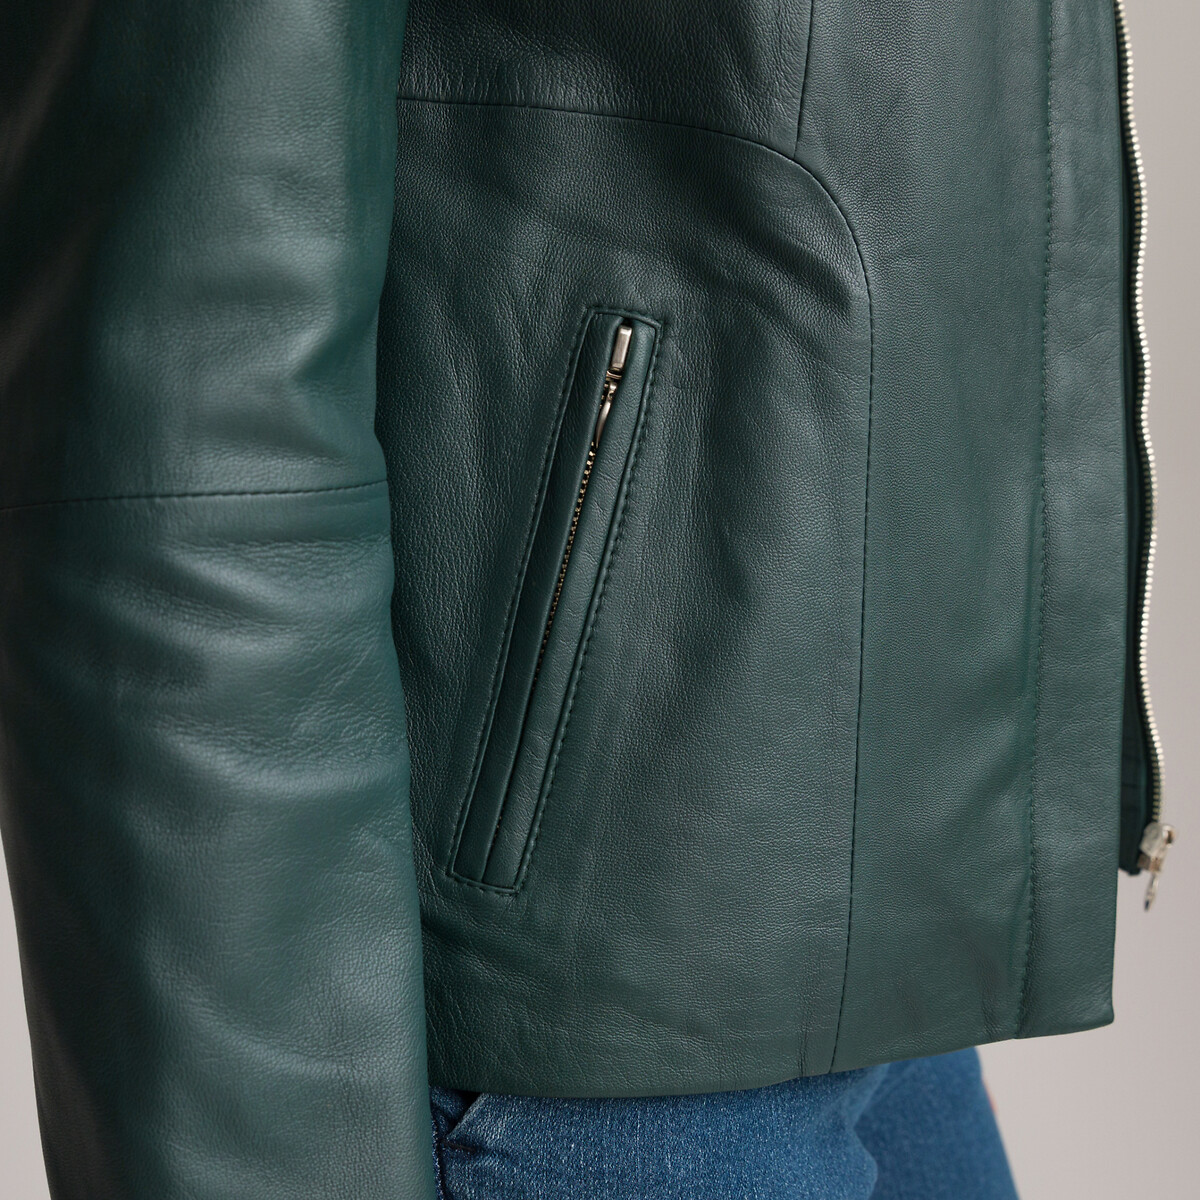 Куртка ANNE WEYBURN Куртка Короткая из кожи ягненка 44 (FR) - 50 (RUS) зеленый, размер 44 (FR) - 50 (RUS) Куртка Короткая из кожи ягненка 44 (FR) - 50 (RUS) зеленый - фото 2